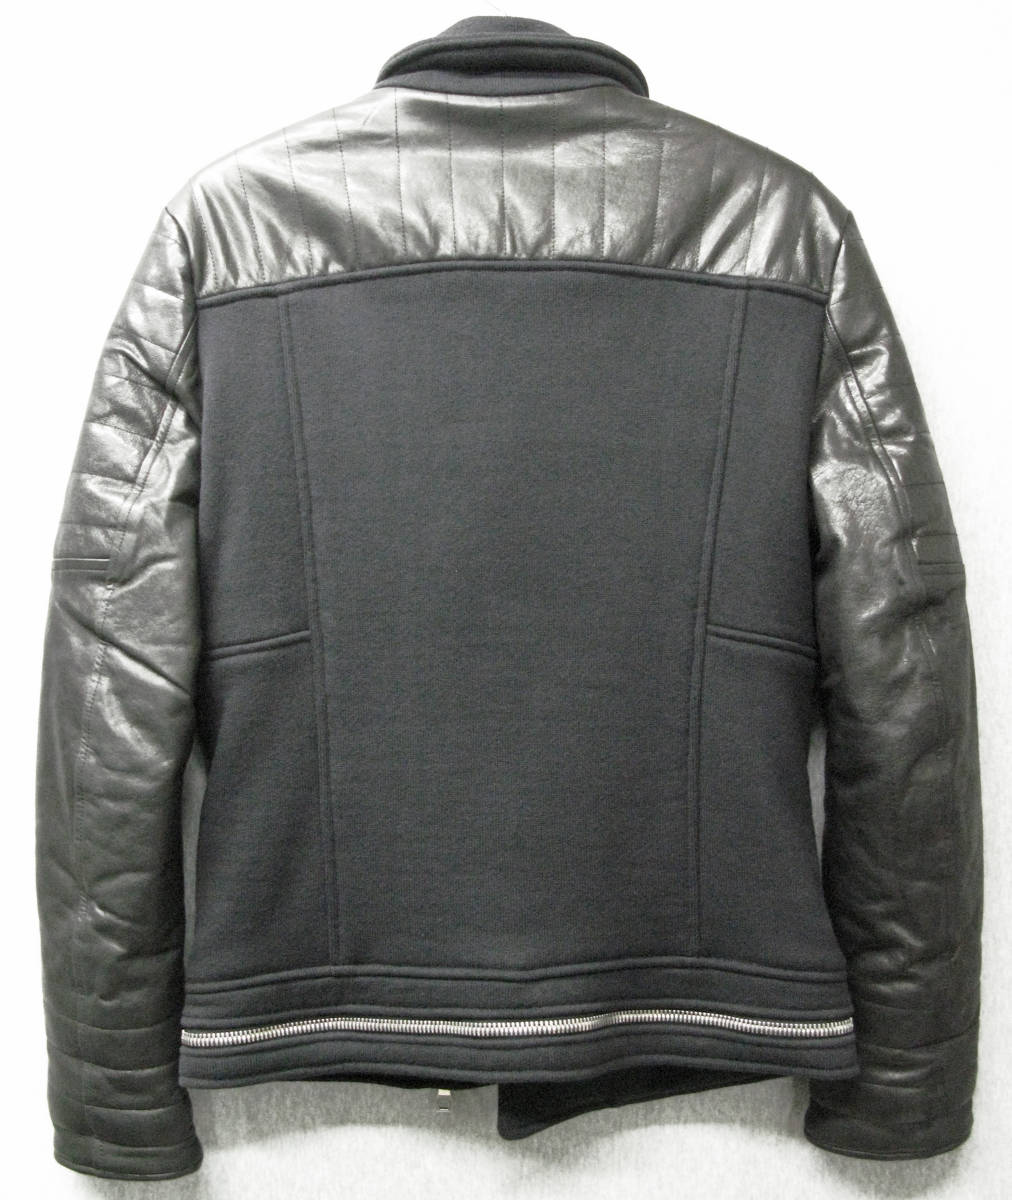  Balmain BALMAIN PARIS: рукав кожа байкерская куртка M ( блузон натуральная кожа BALMAIN HOMME Leather Sleeve Raider\'s Jacket M